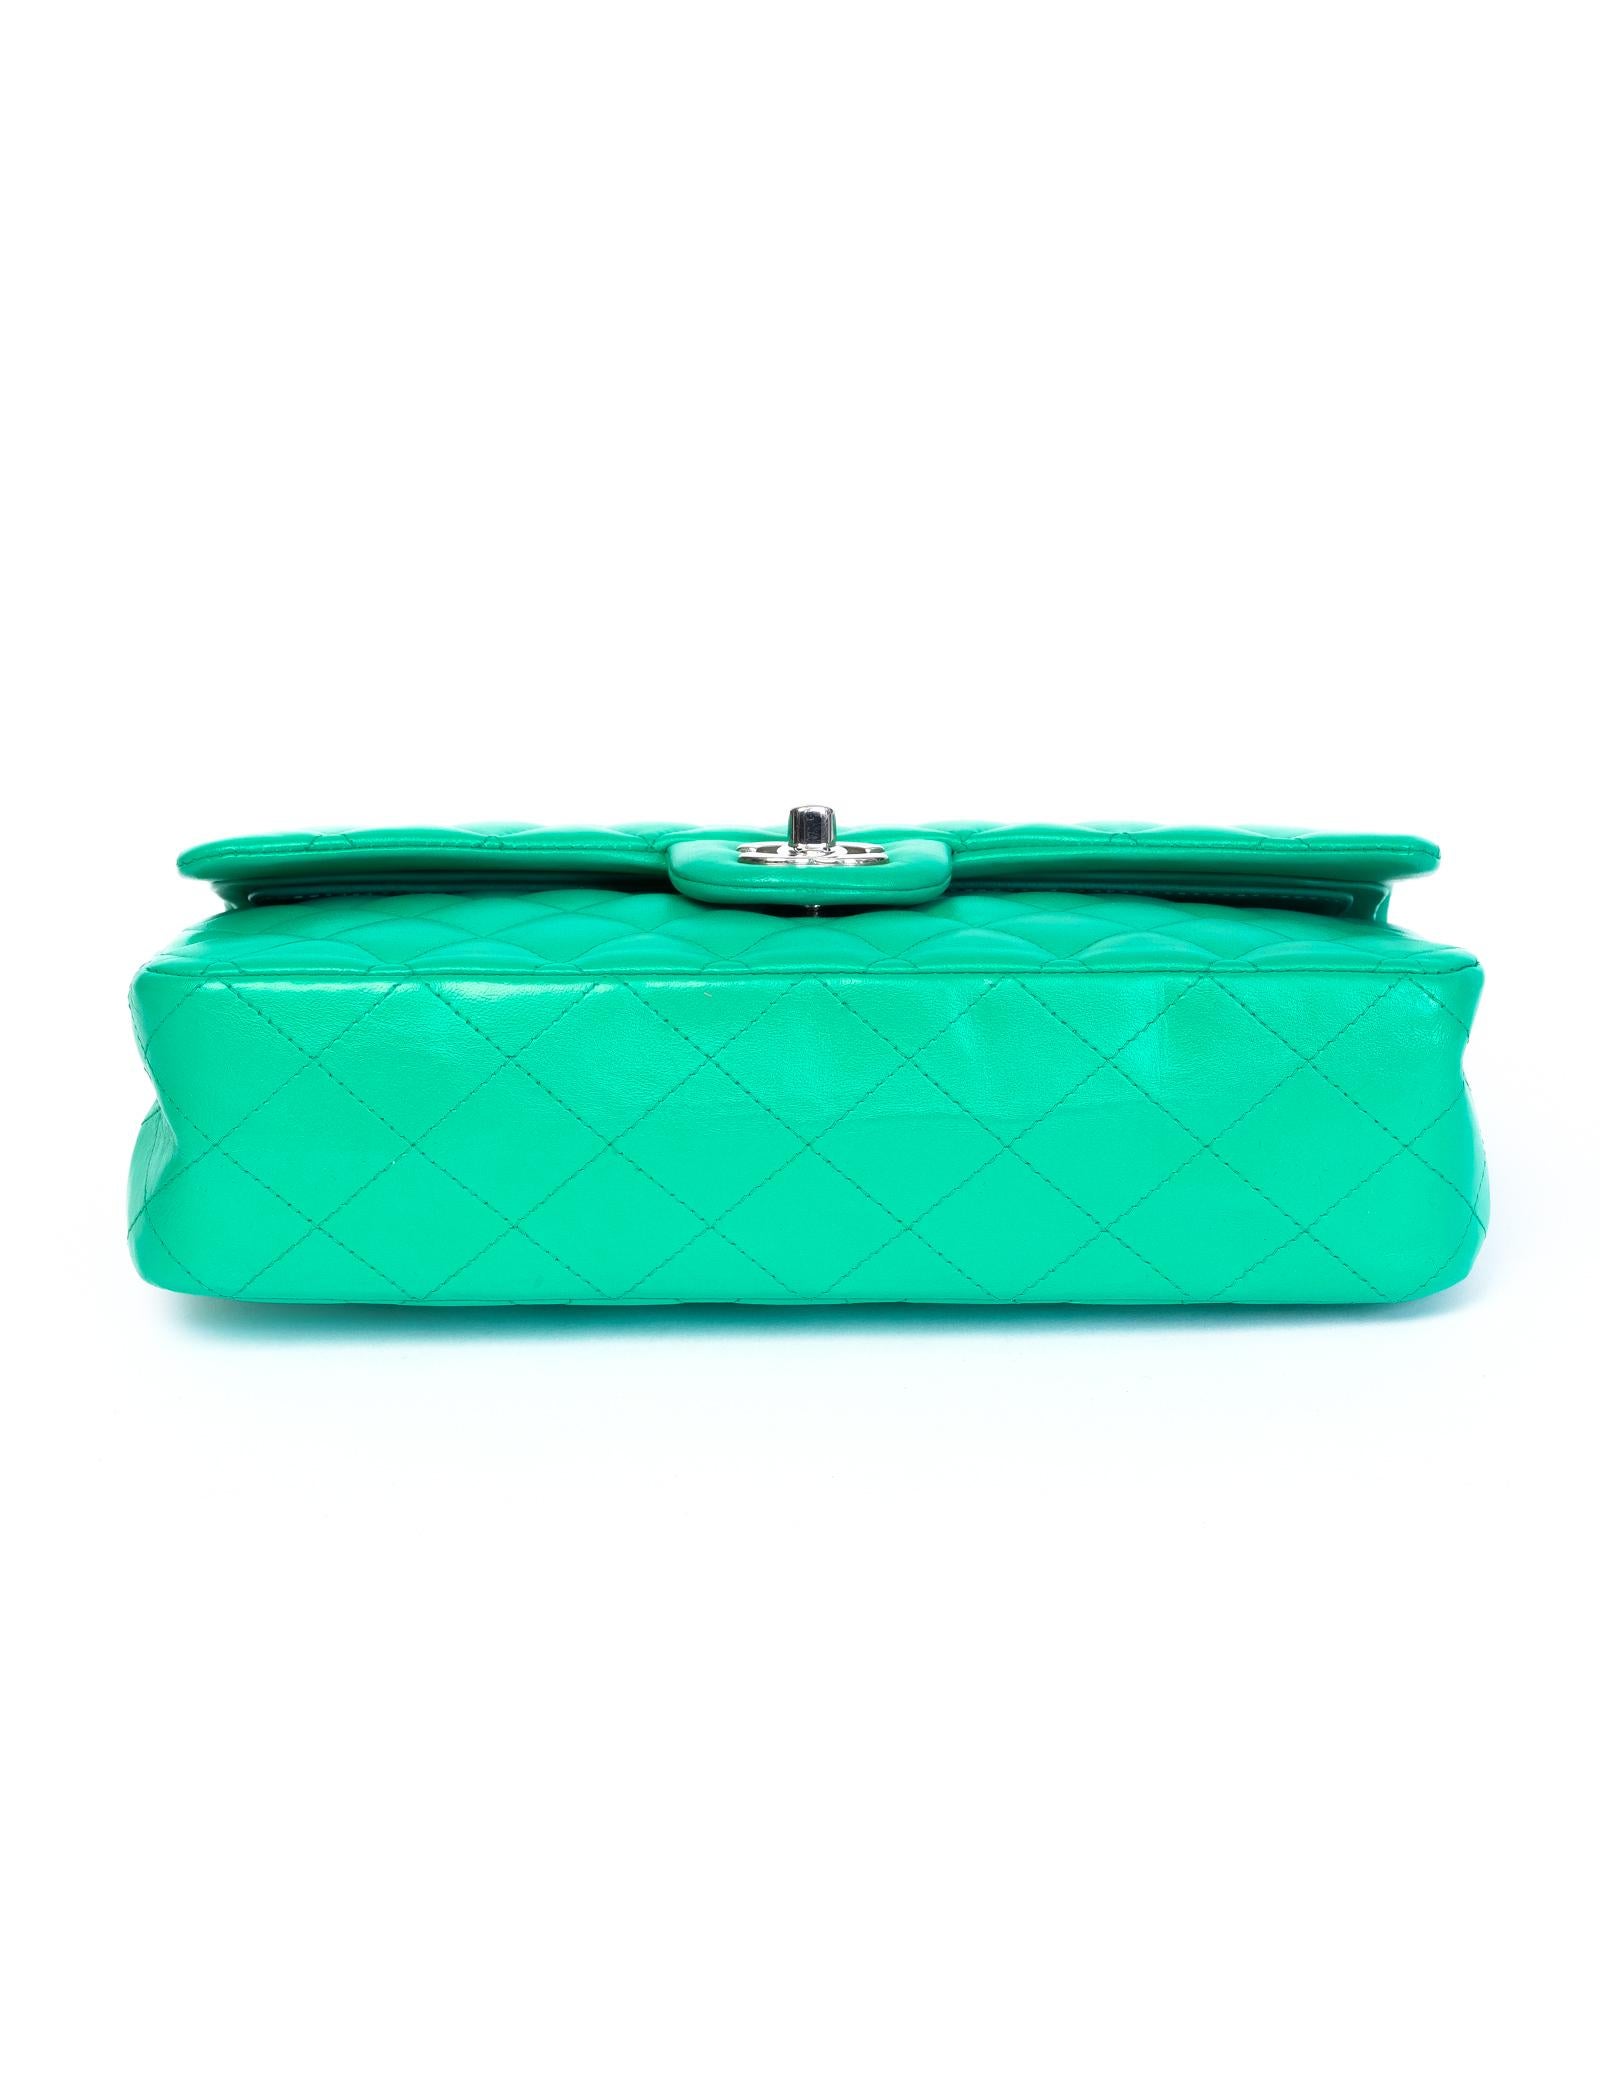 green chanel bag